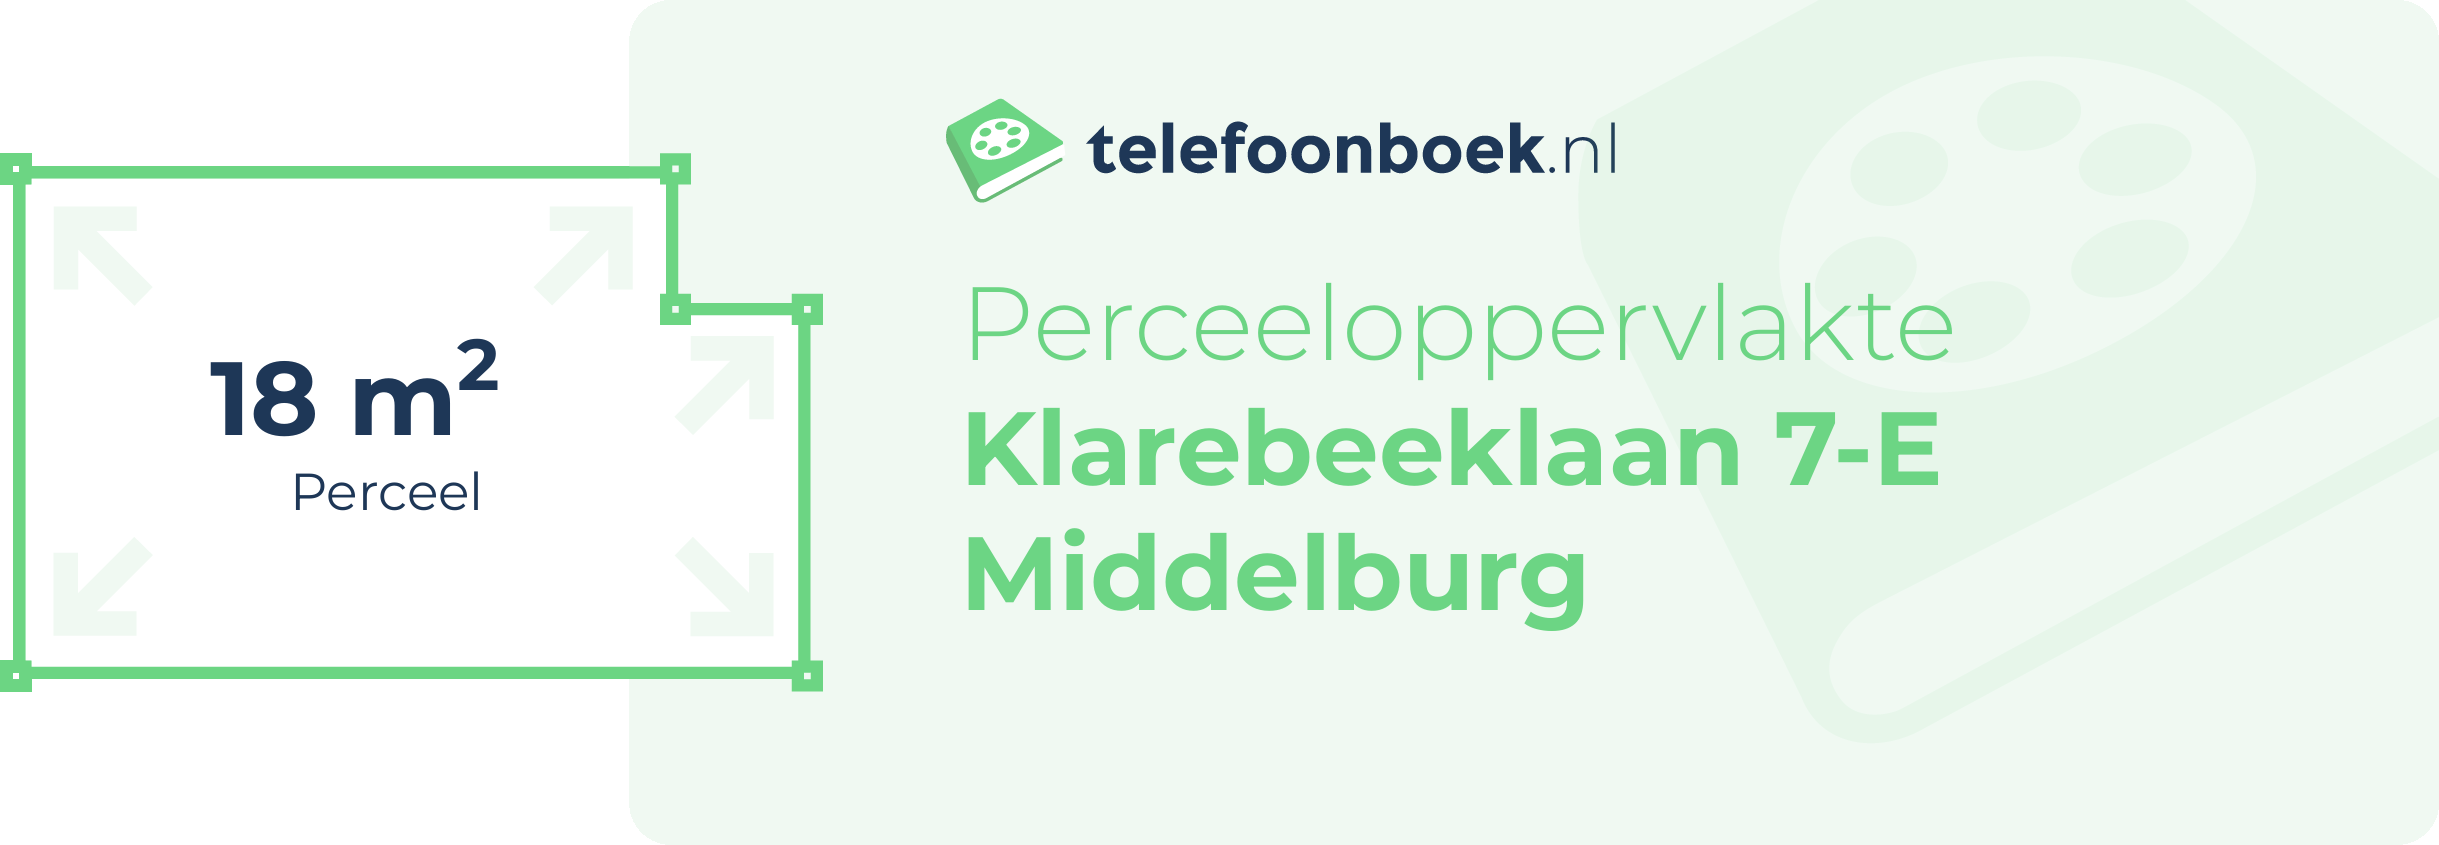 Perceeloppervlakte Klarebeeklaan 7-E Middelburg